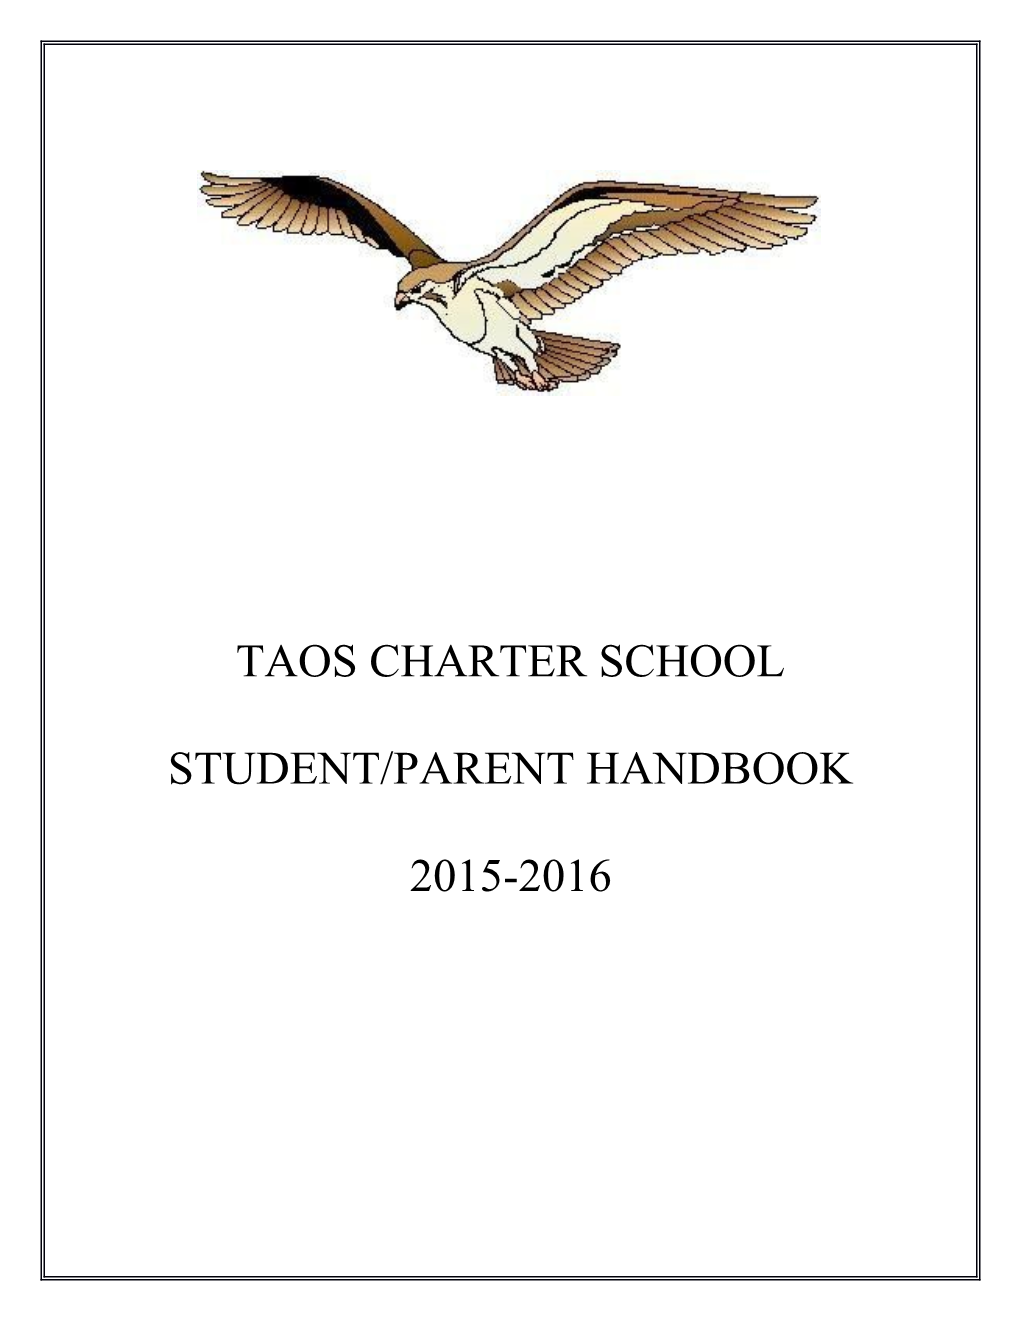 Taos Charter School